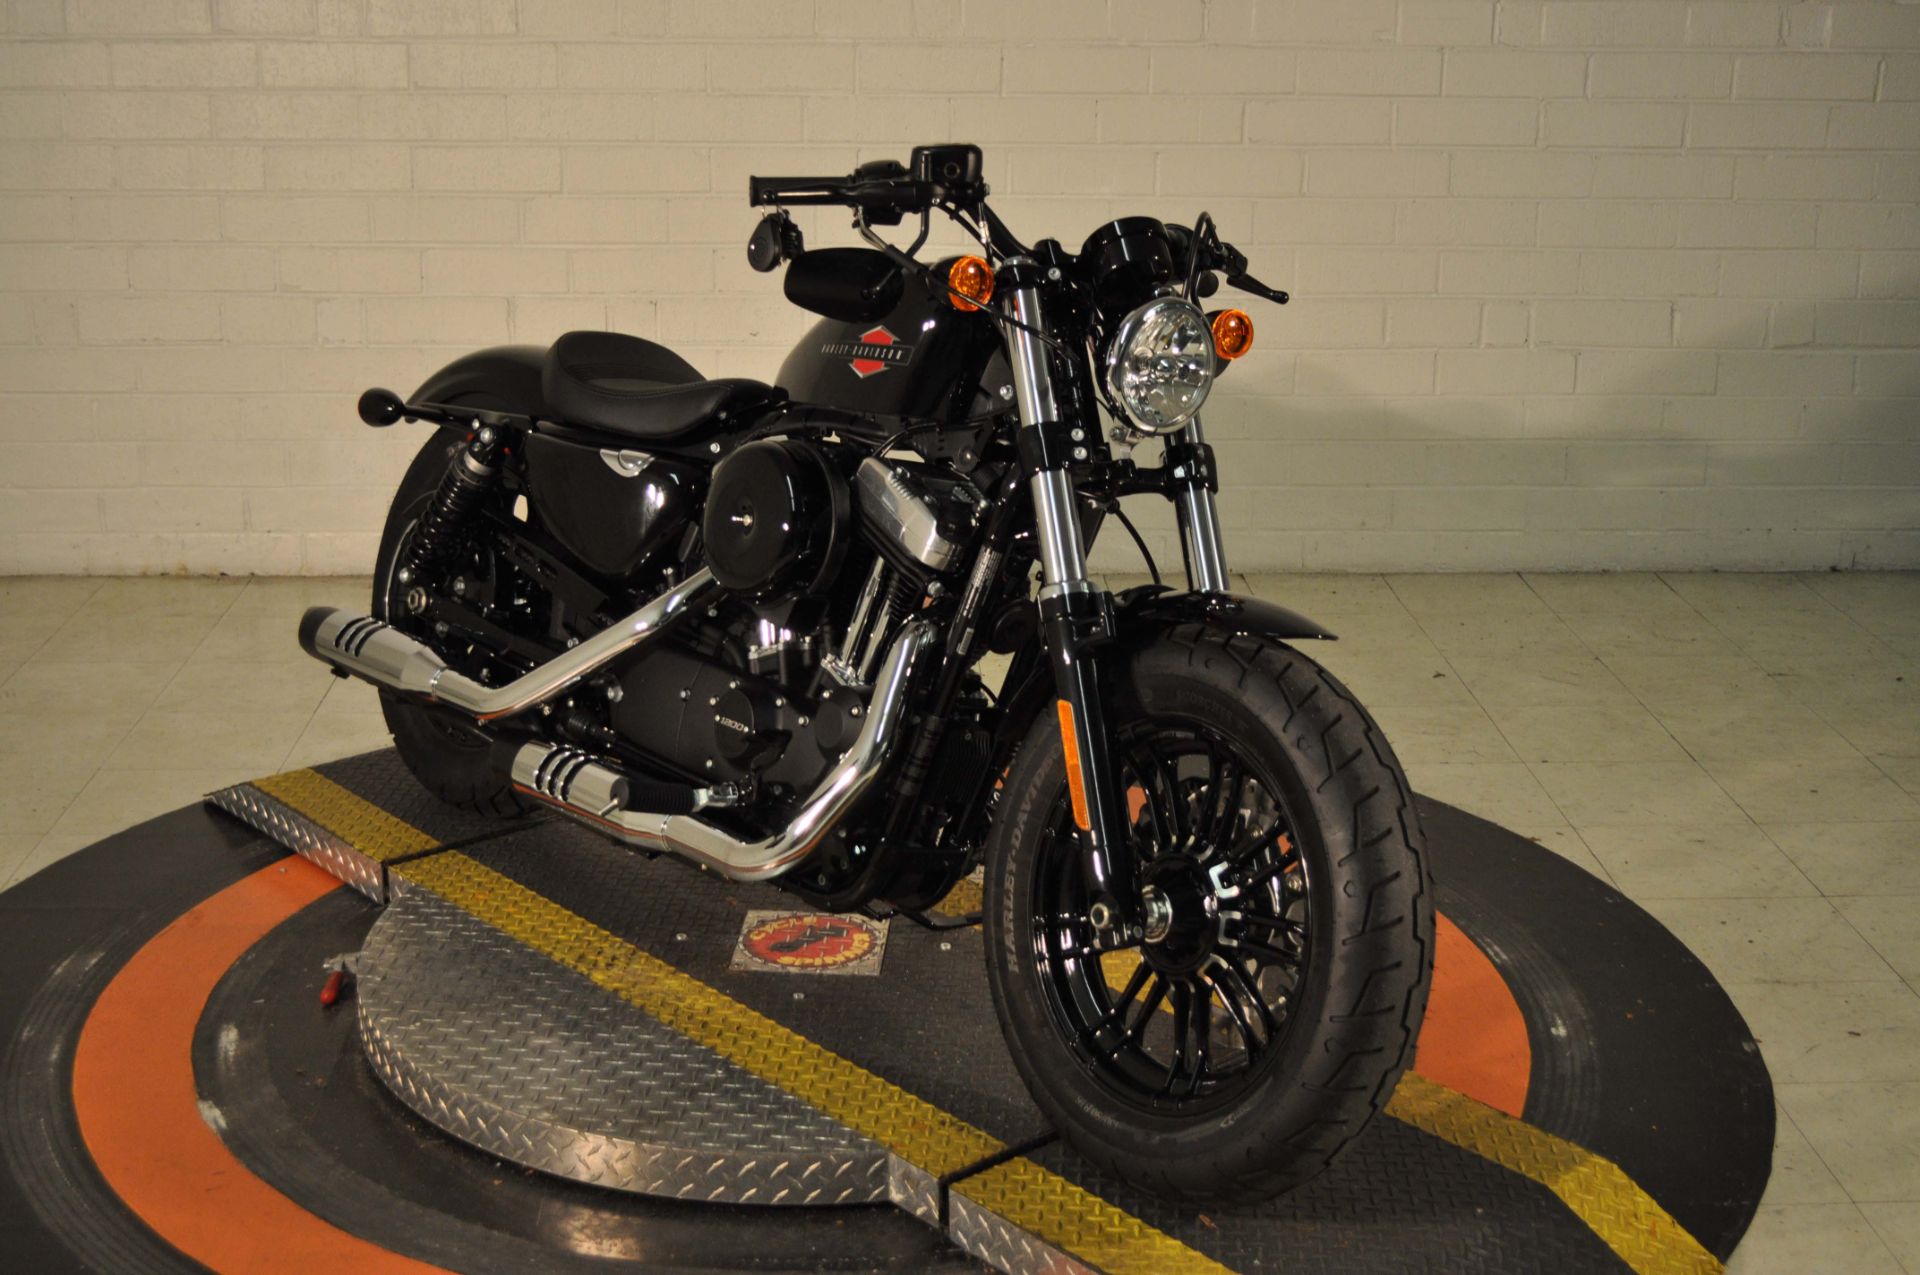 2022 Harley-Davidson Forty-Eight® in Winston Salem, North Carolina - Photo 9